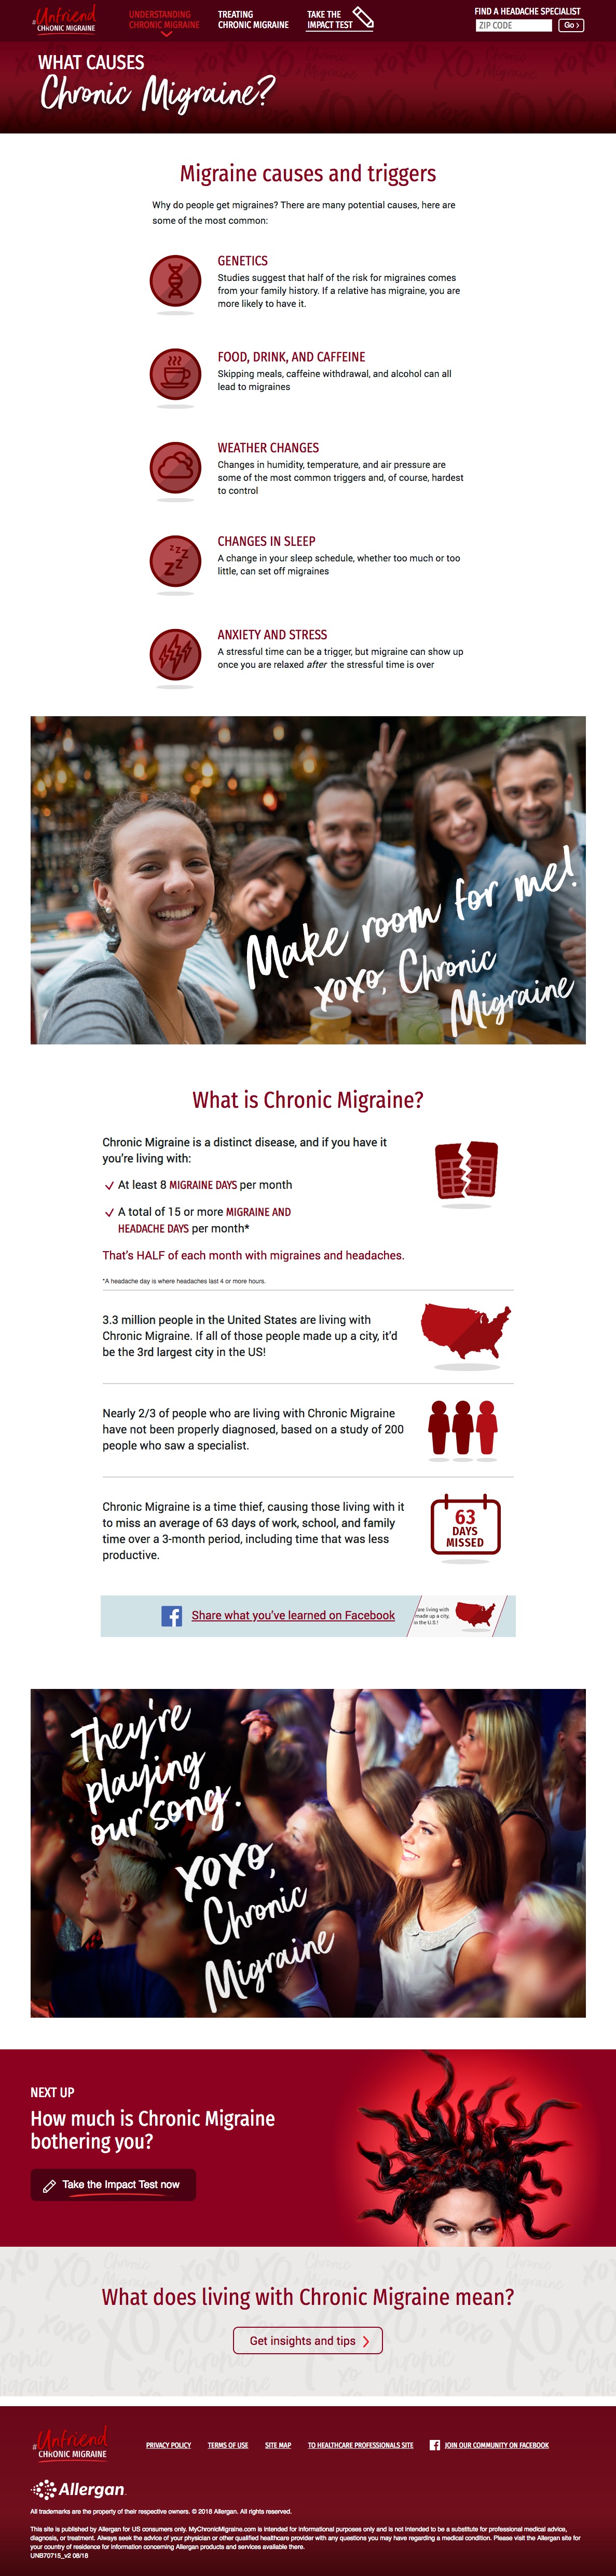 What Causes Chronic Migraine